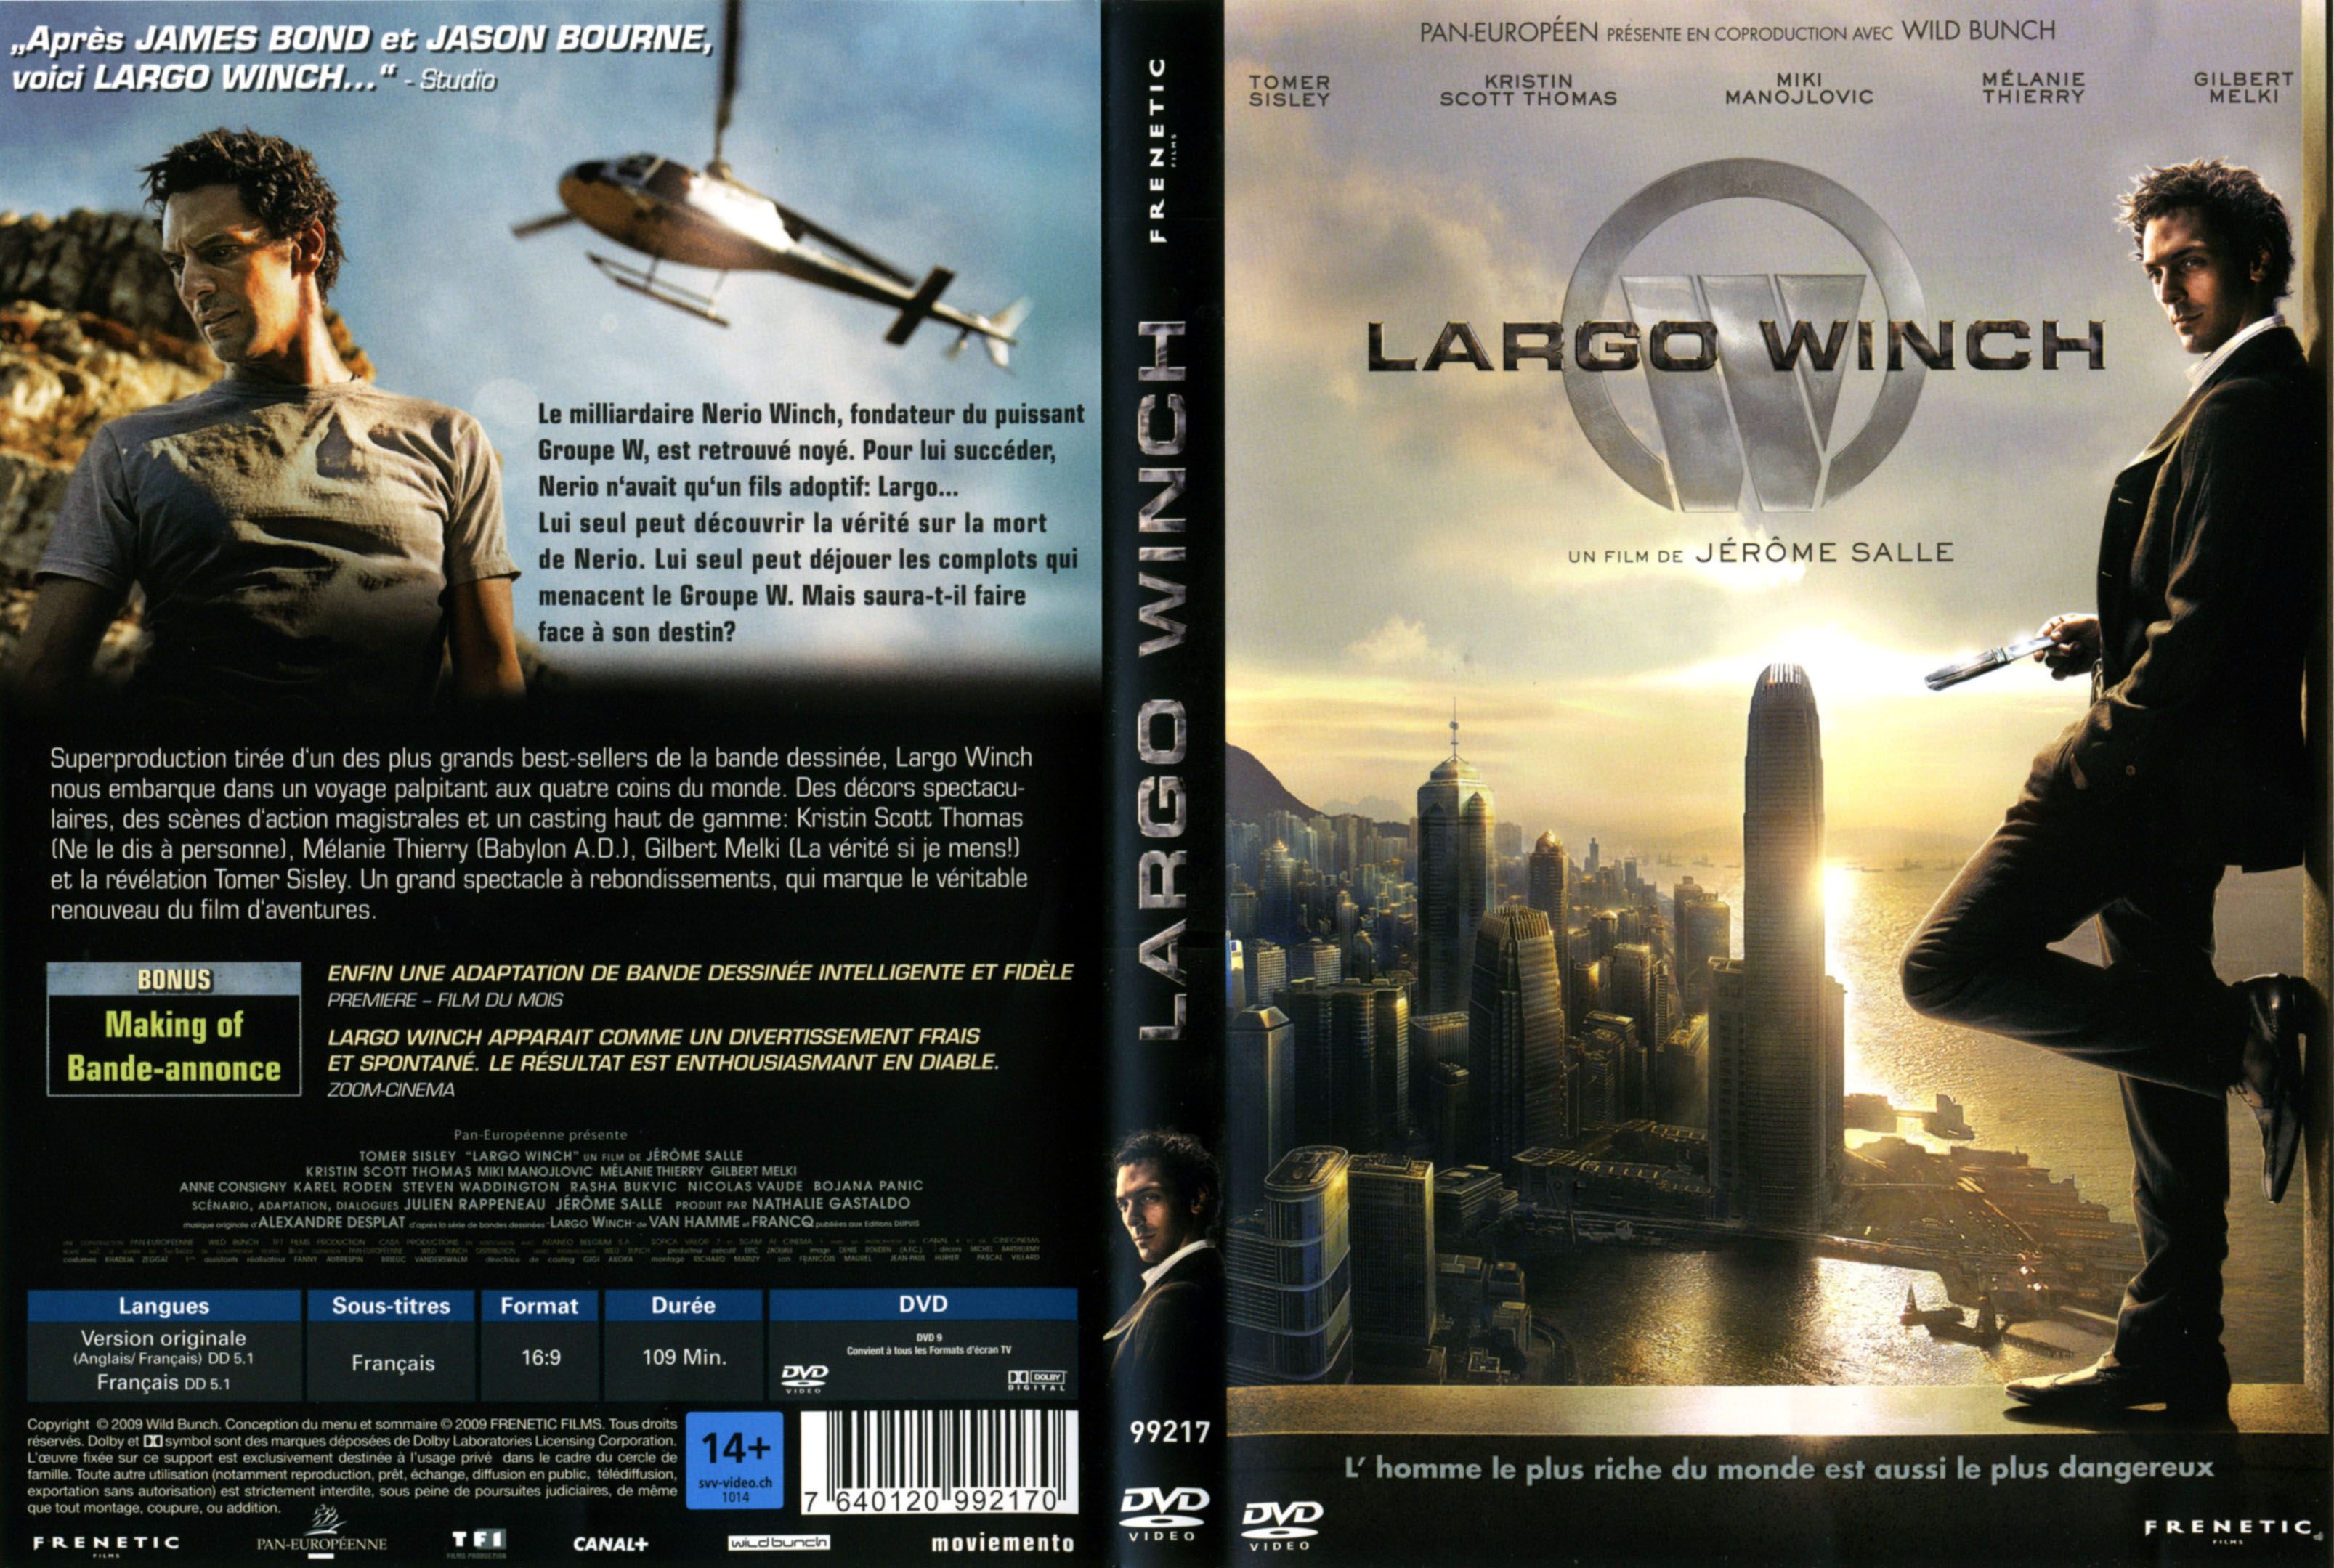 Jaquette DVD Largo Winch v2